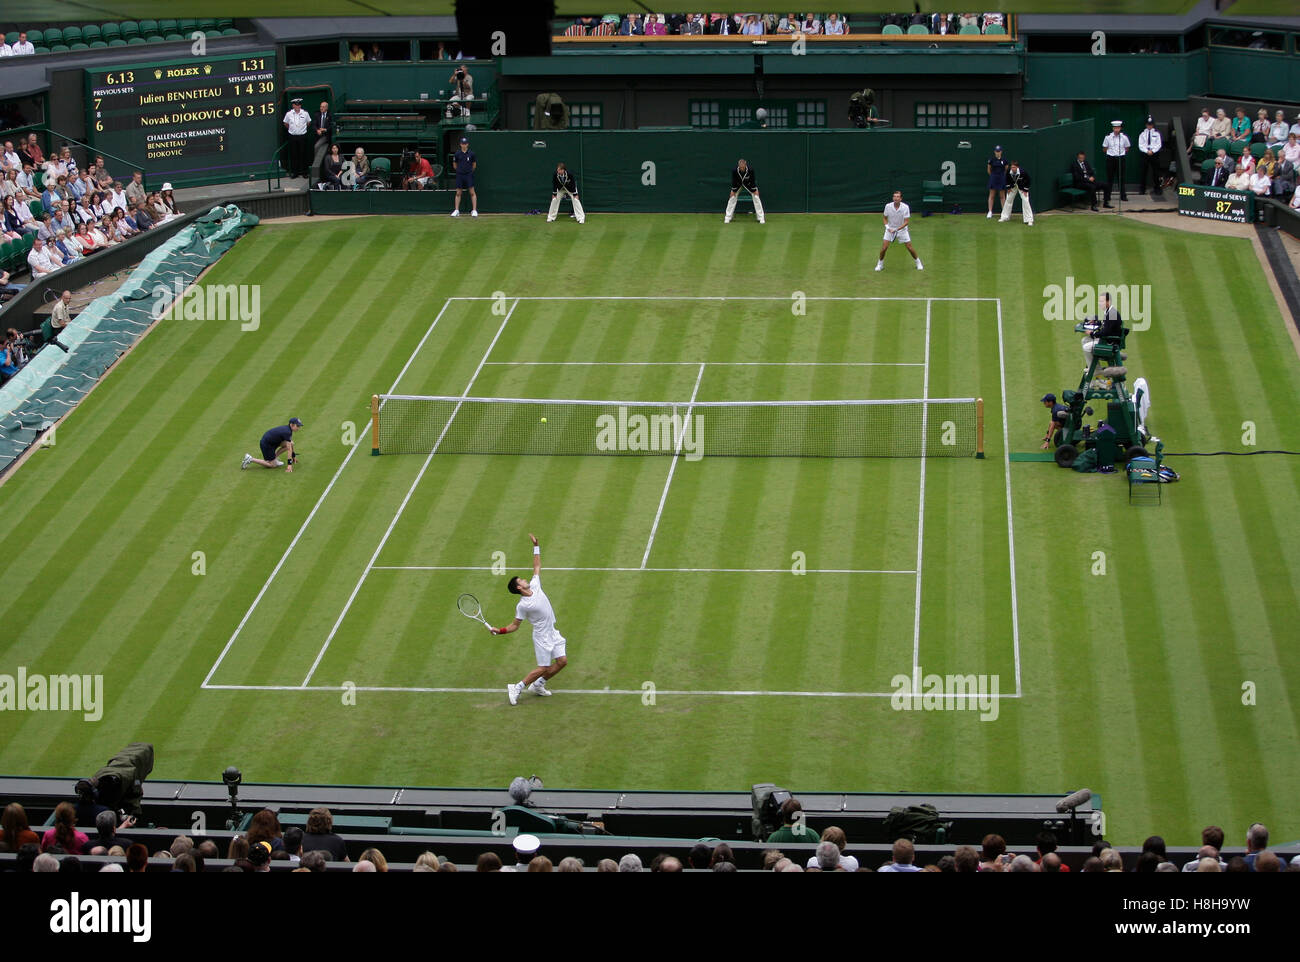 Tennis, ITF Grand Slam Tournament, Centre Court, overview, Wimbledon 2009, Britain, Europe Stock Photo